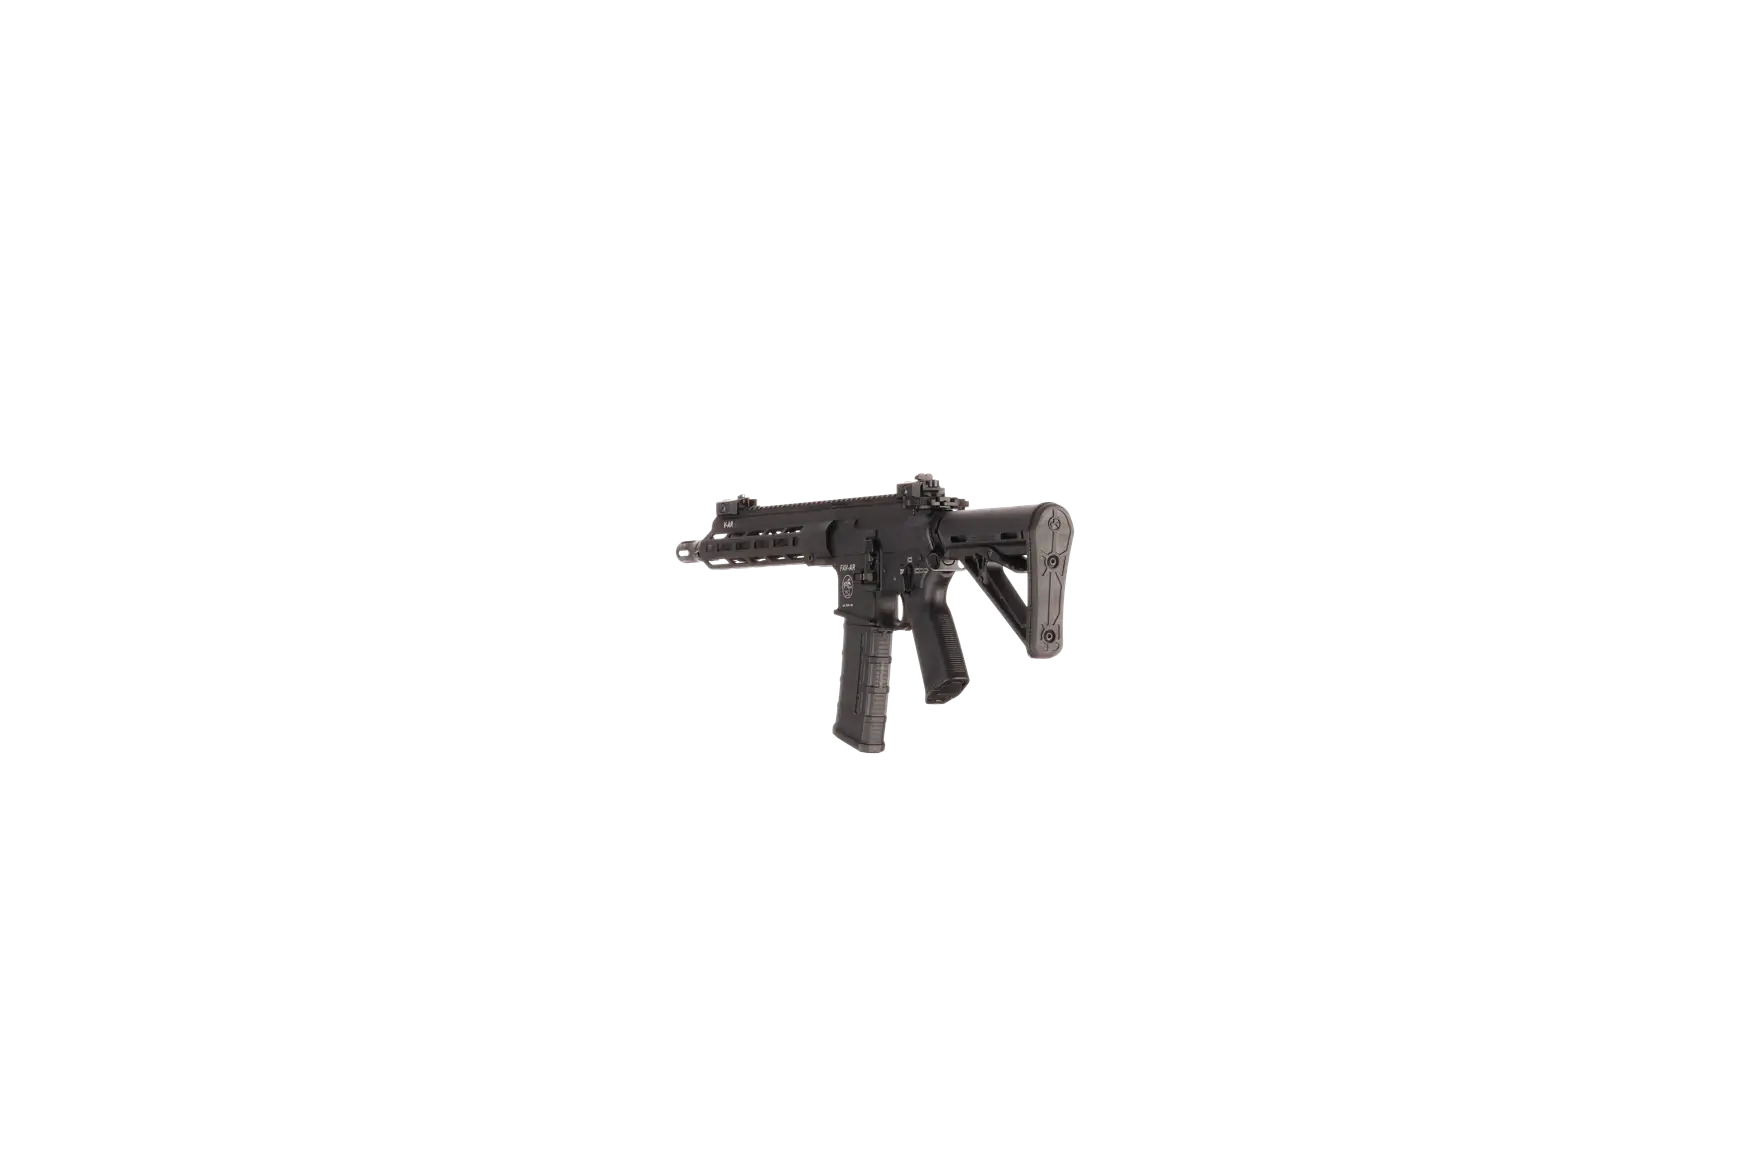 Náhledový obrázek pušky V-AR 556 x 45mm SPINVIEW 1 R49